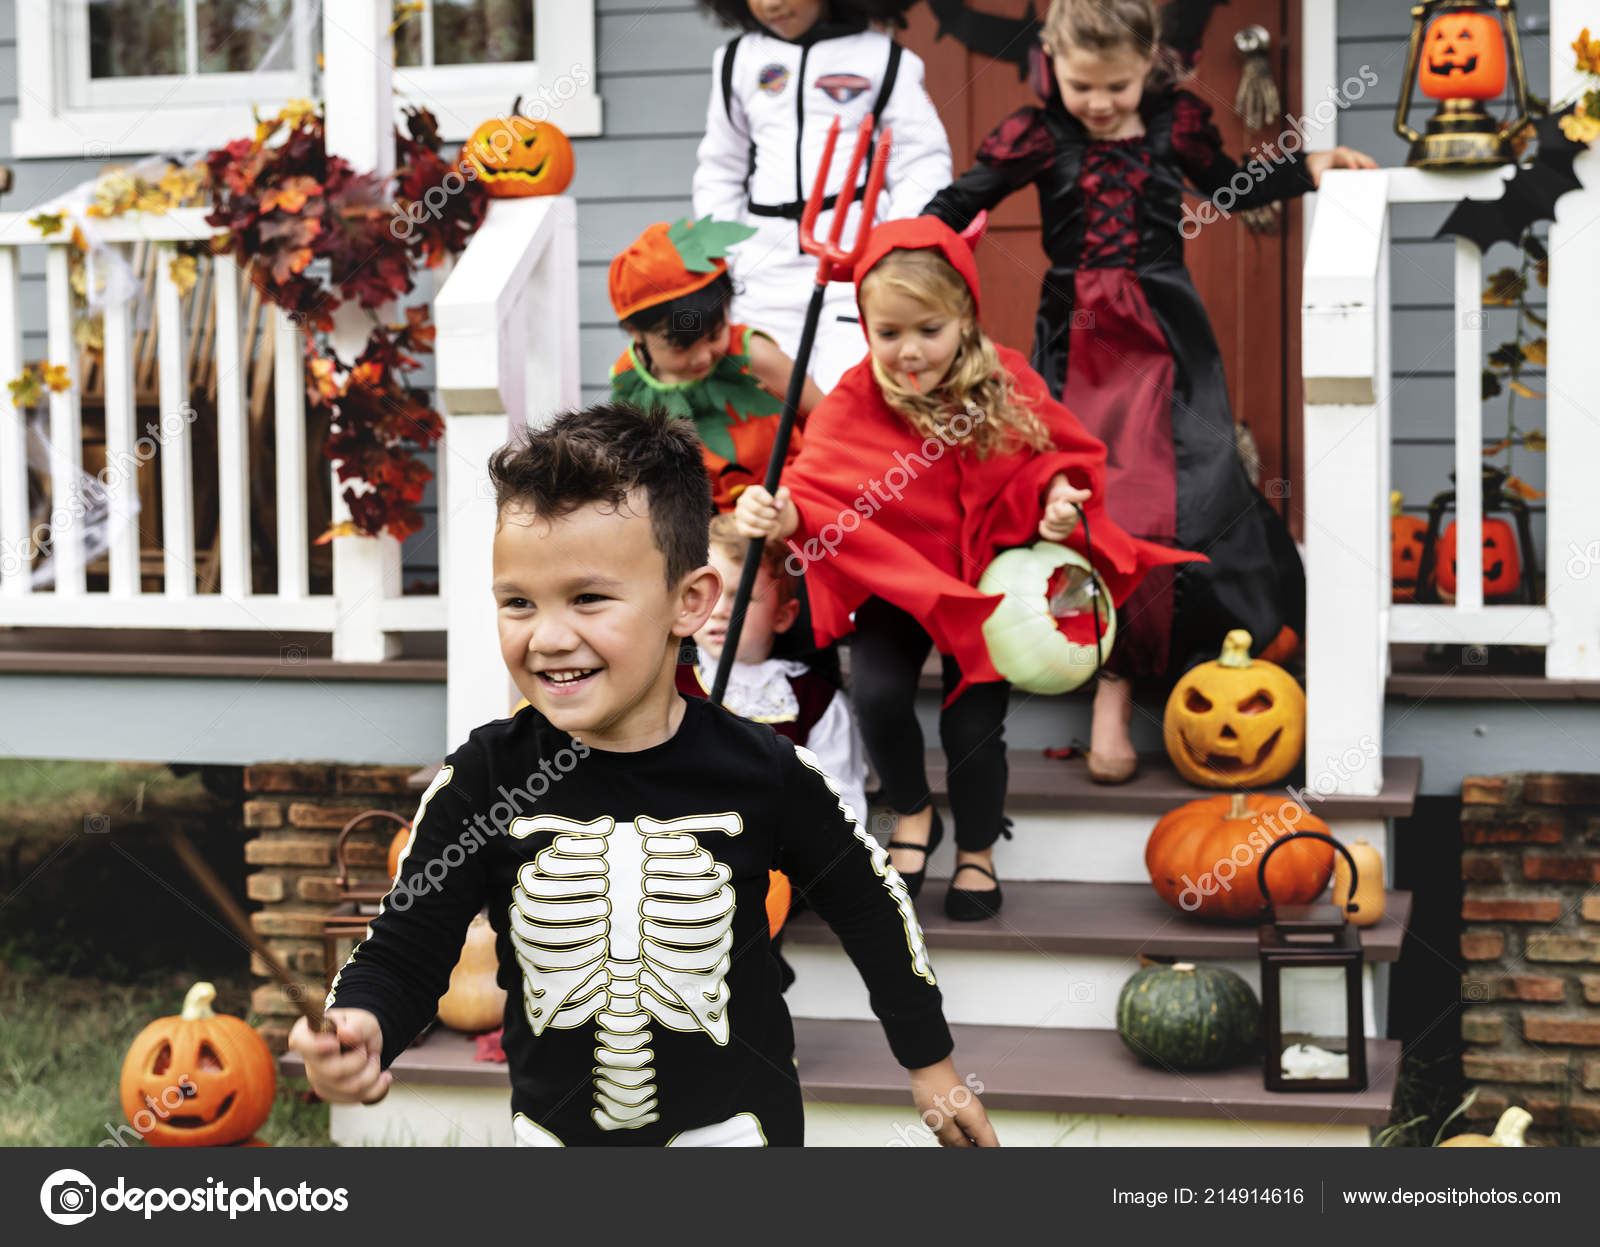 Young Kids Trick Treating Halloween — Stock Photo © Rawpixel 214914616